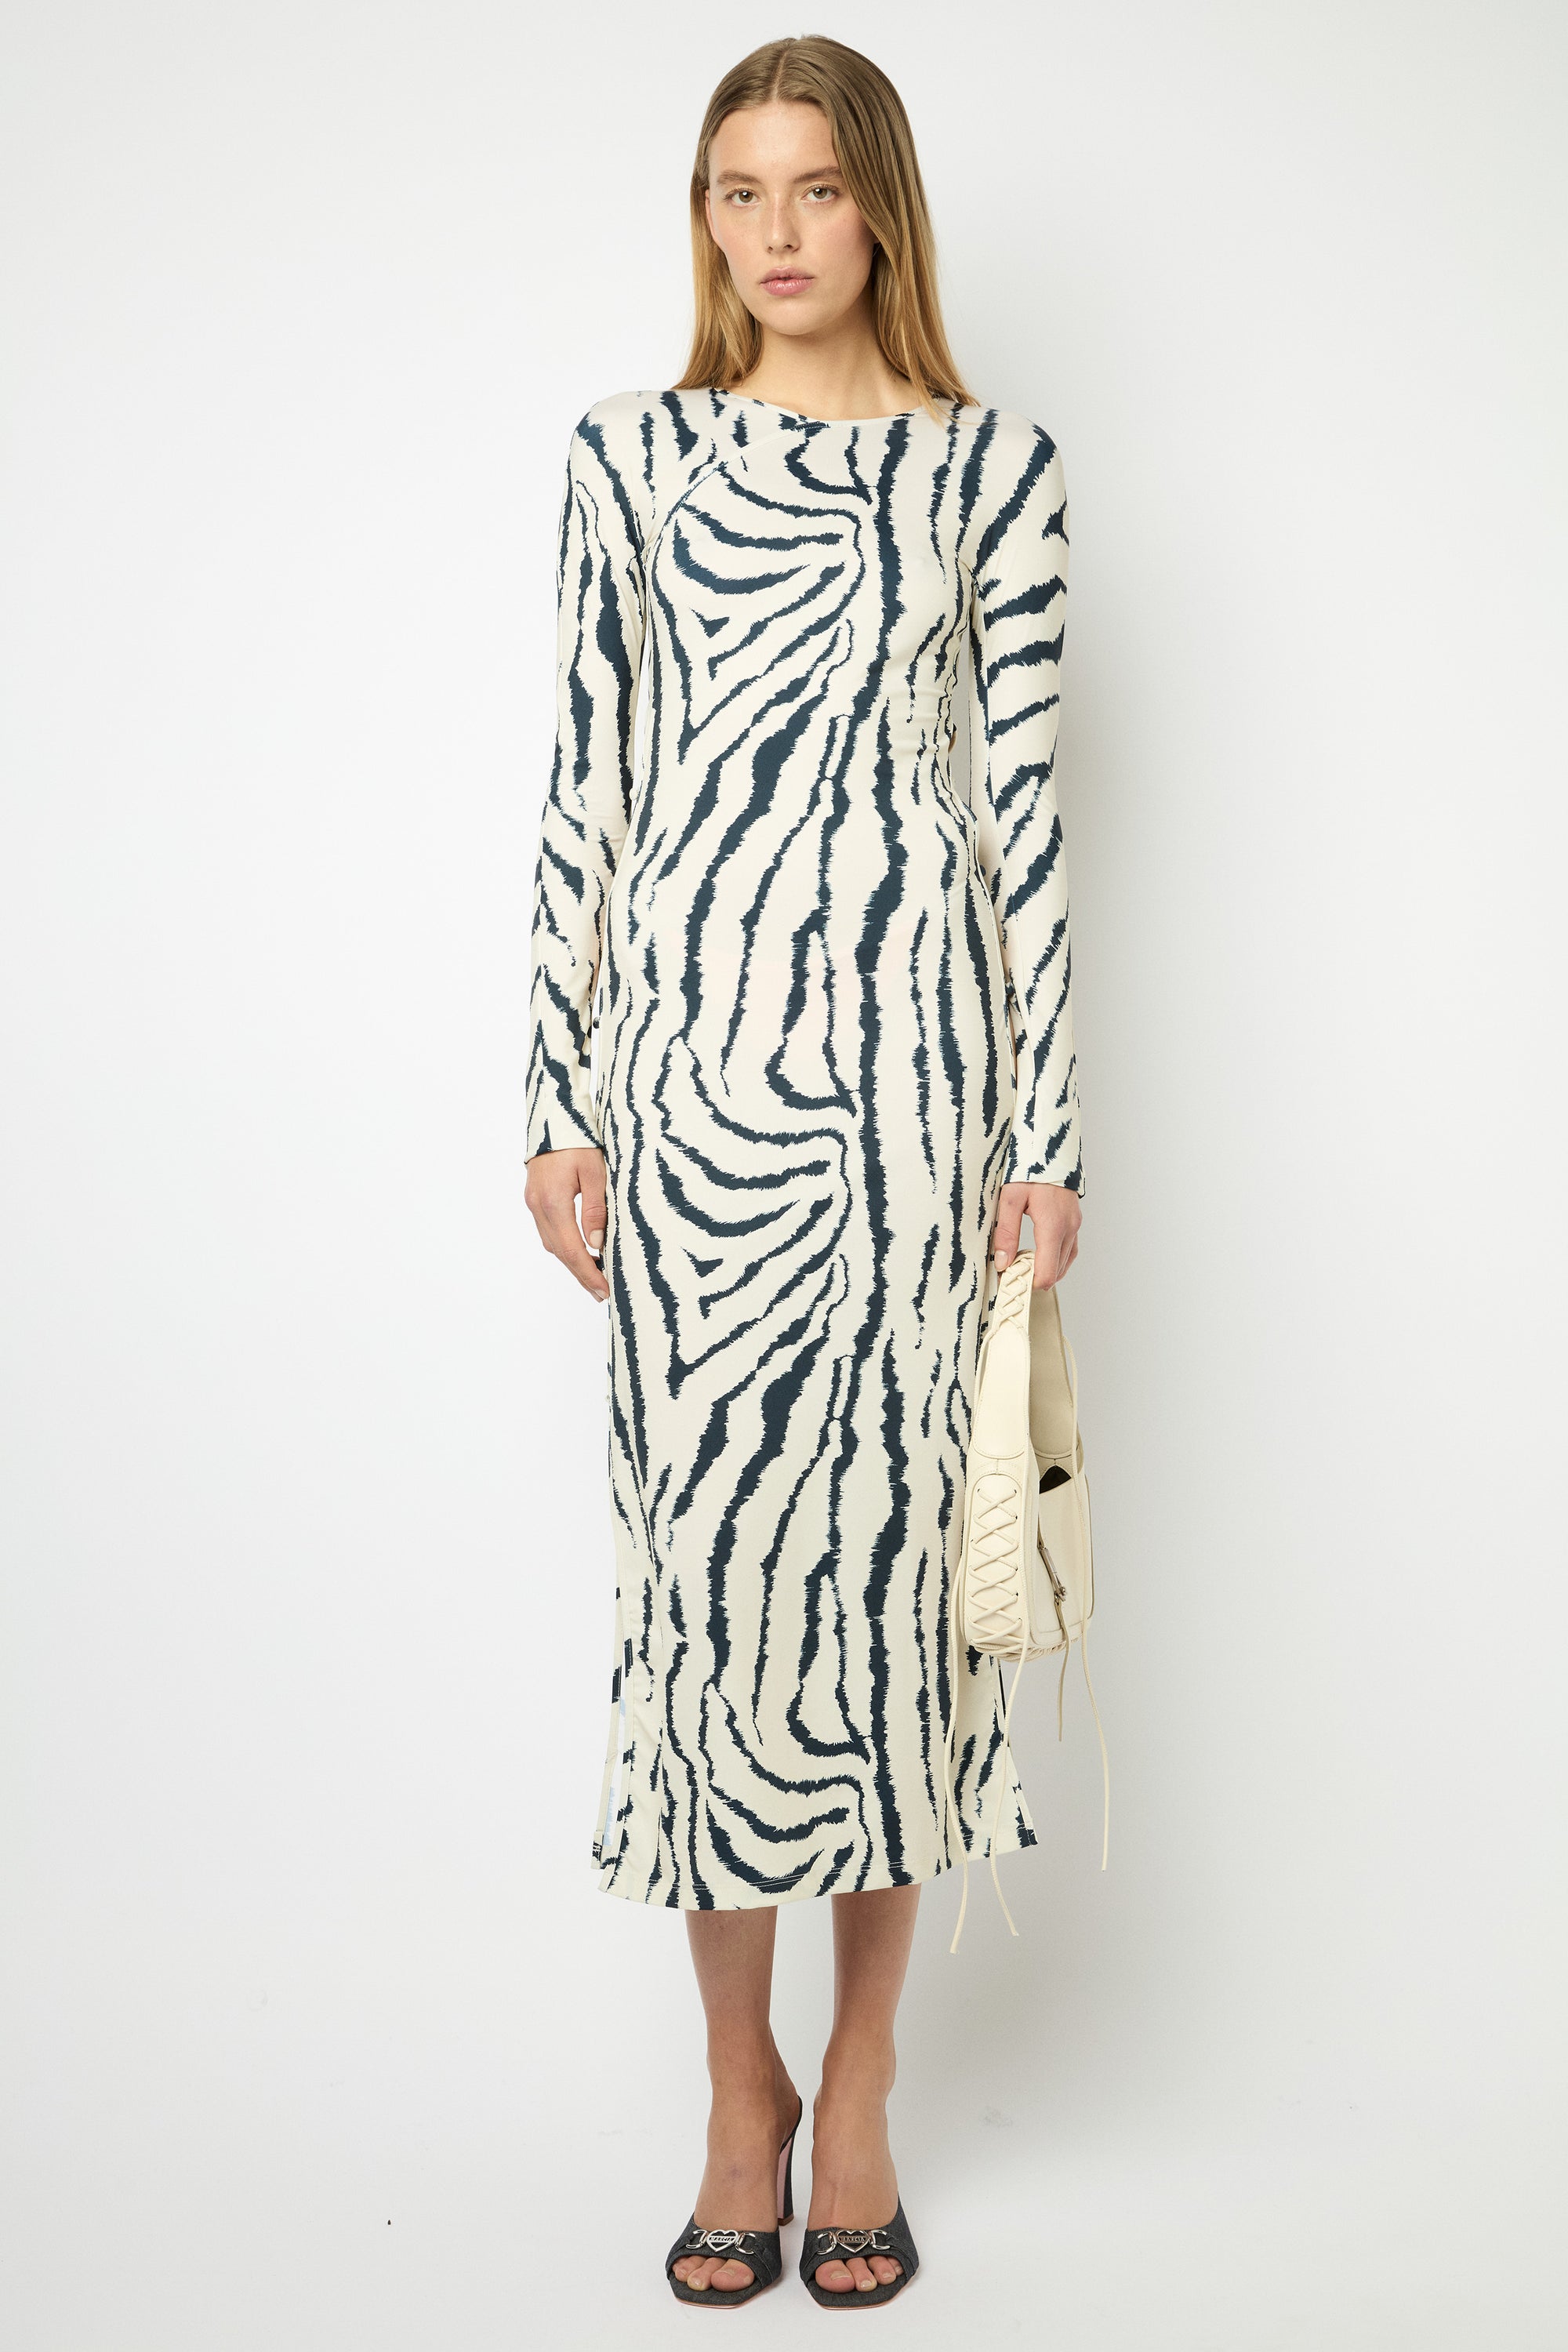 TWIGGY LONG DRESS in blue and white zebra print